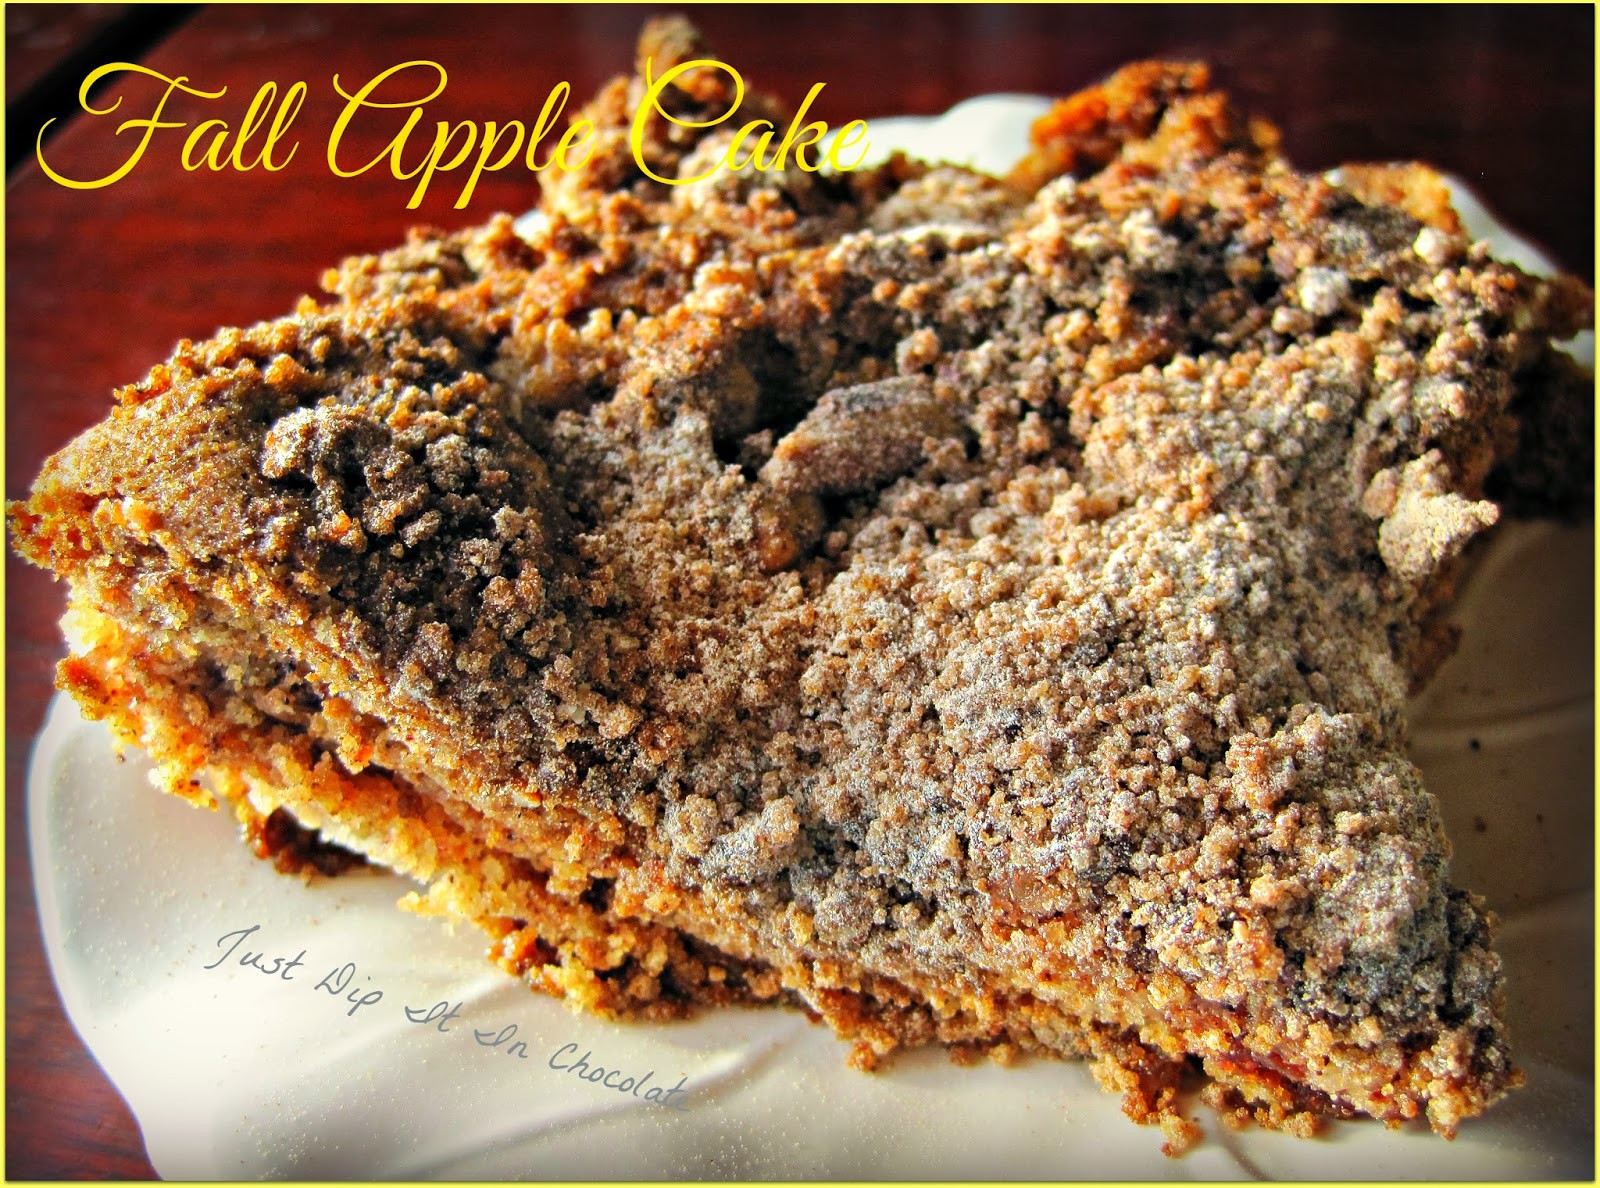 Fall Cake Recipes
 Just Dip It In Chocolate Fall Apple Cake Recipe